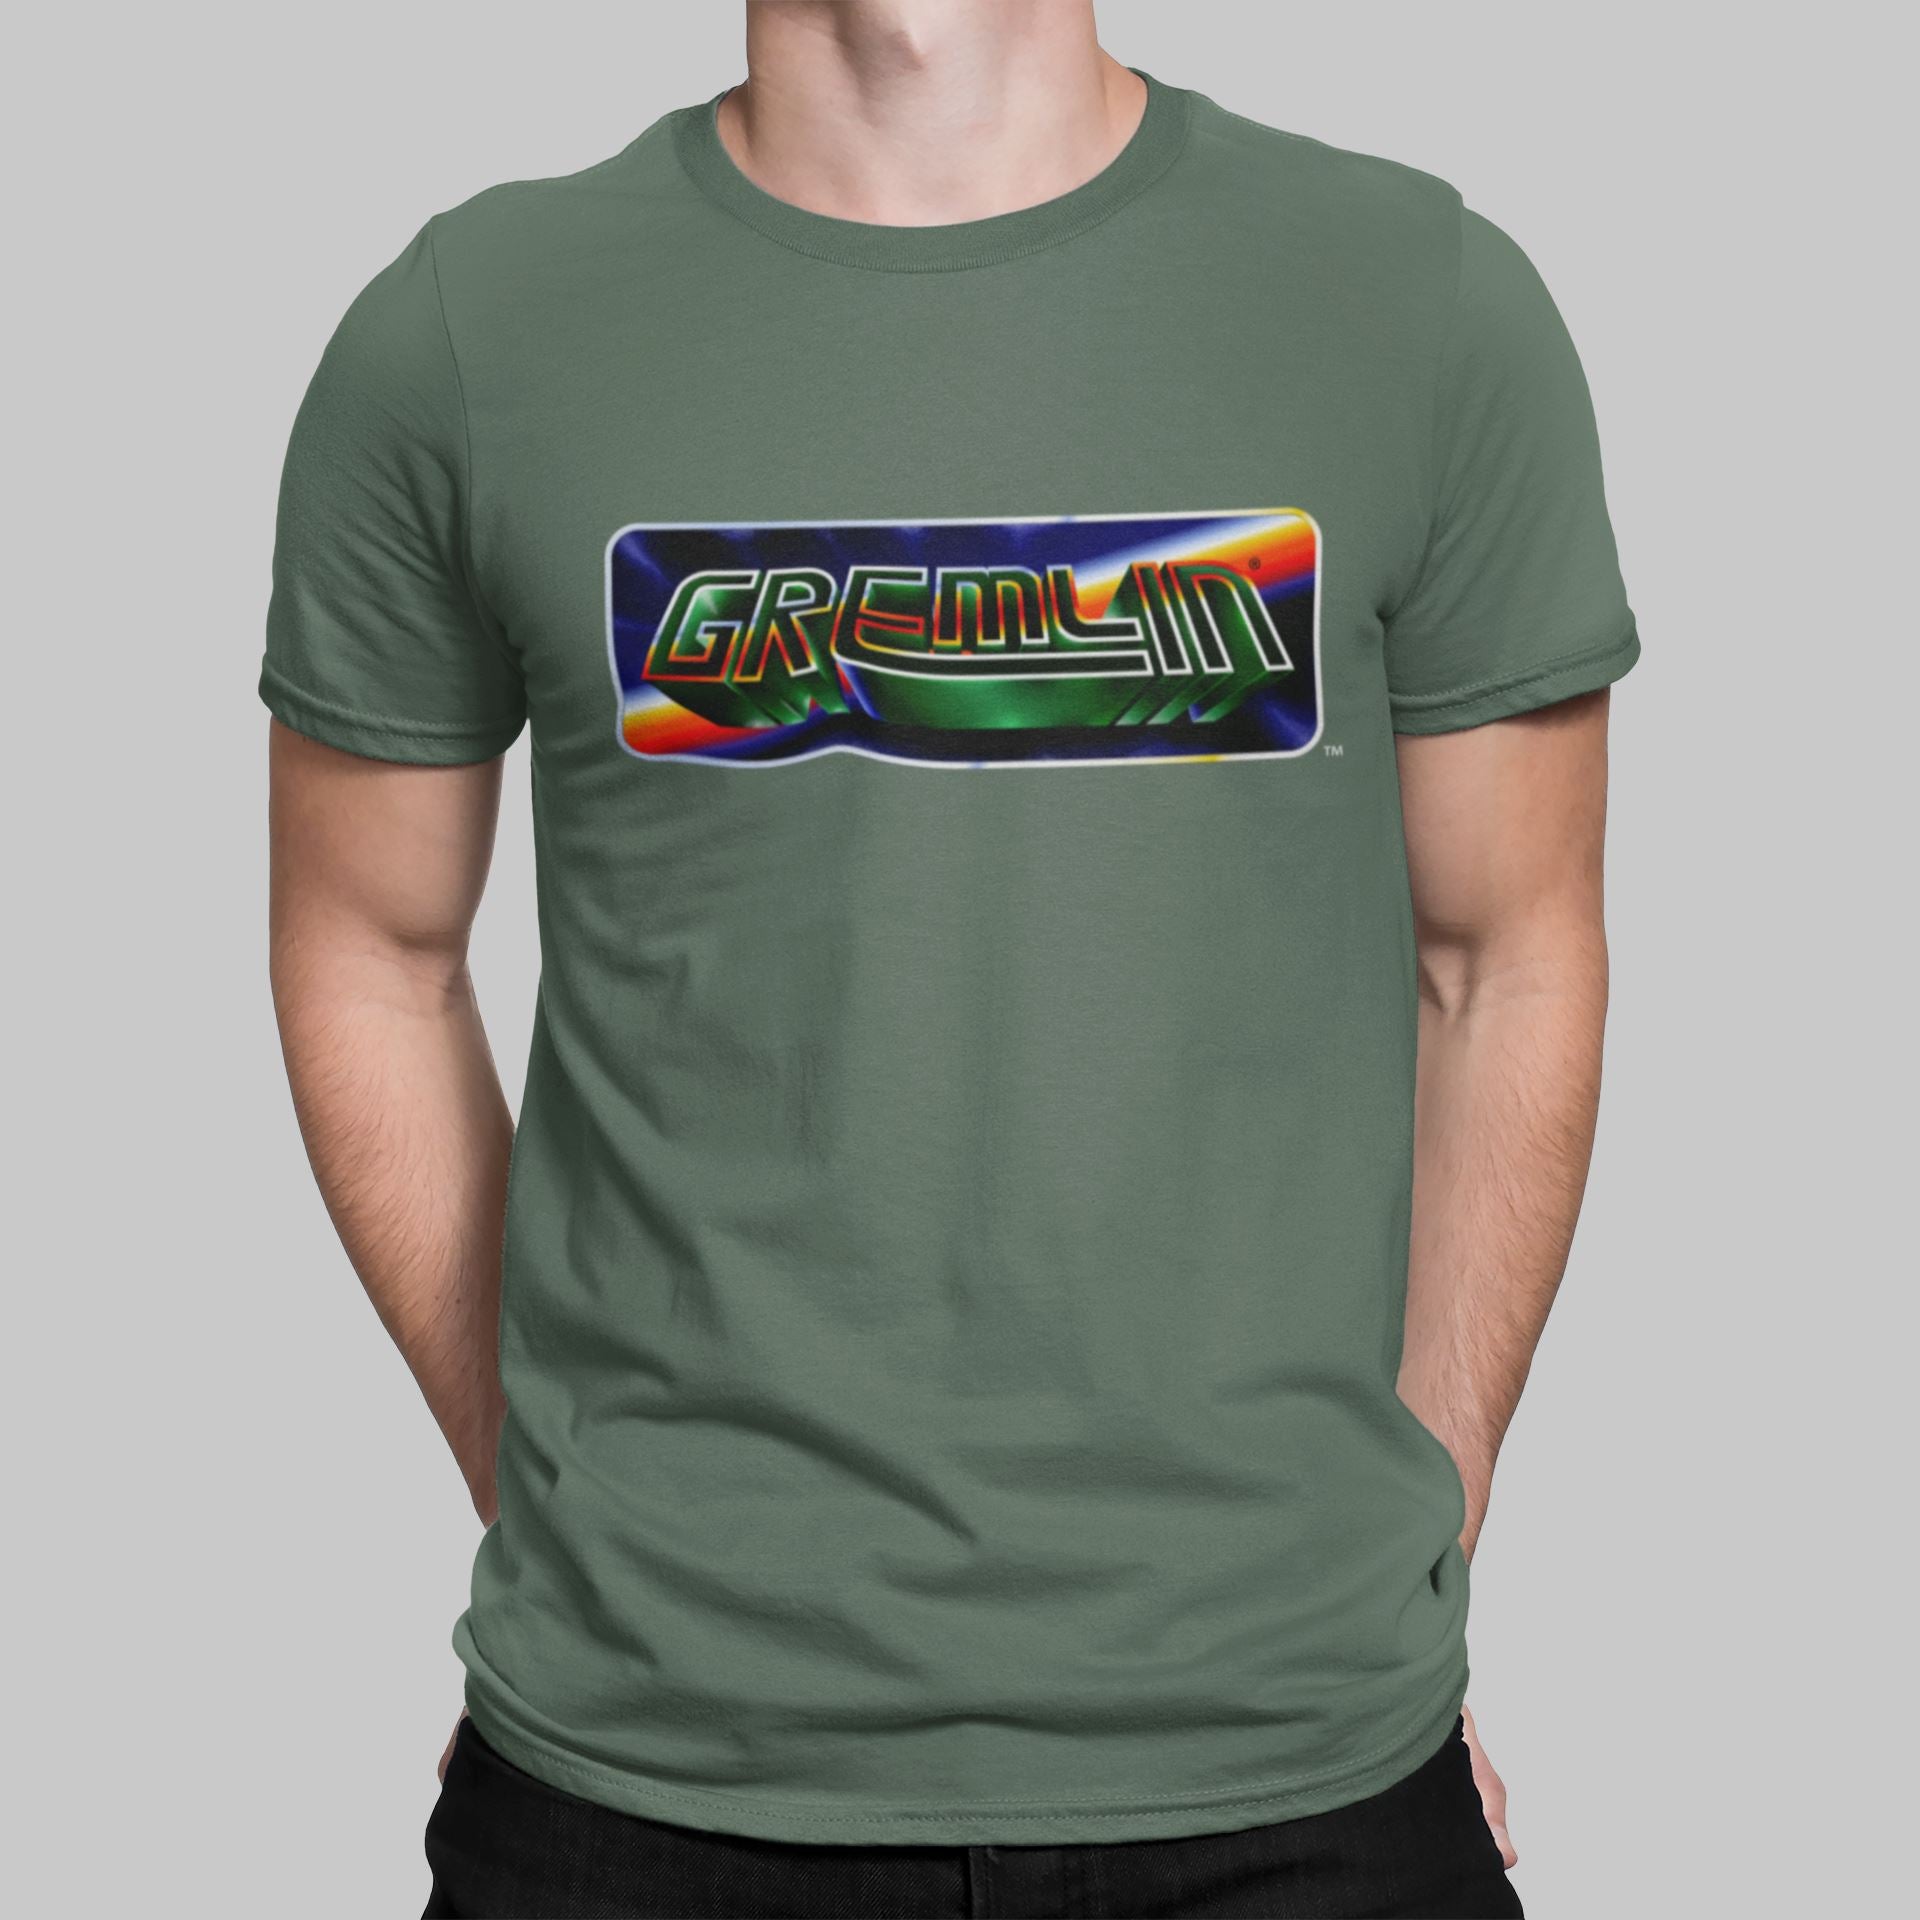 Gremlin Graphics Retro Gaming T-Shirt T-Shirt Seven Squared Small 34-36" Military Green 